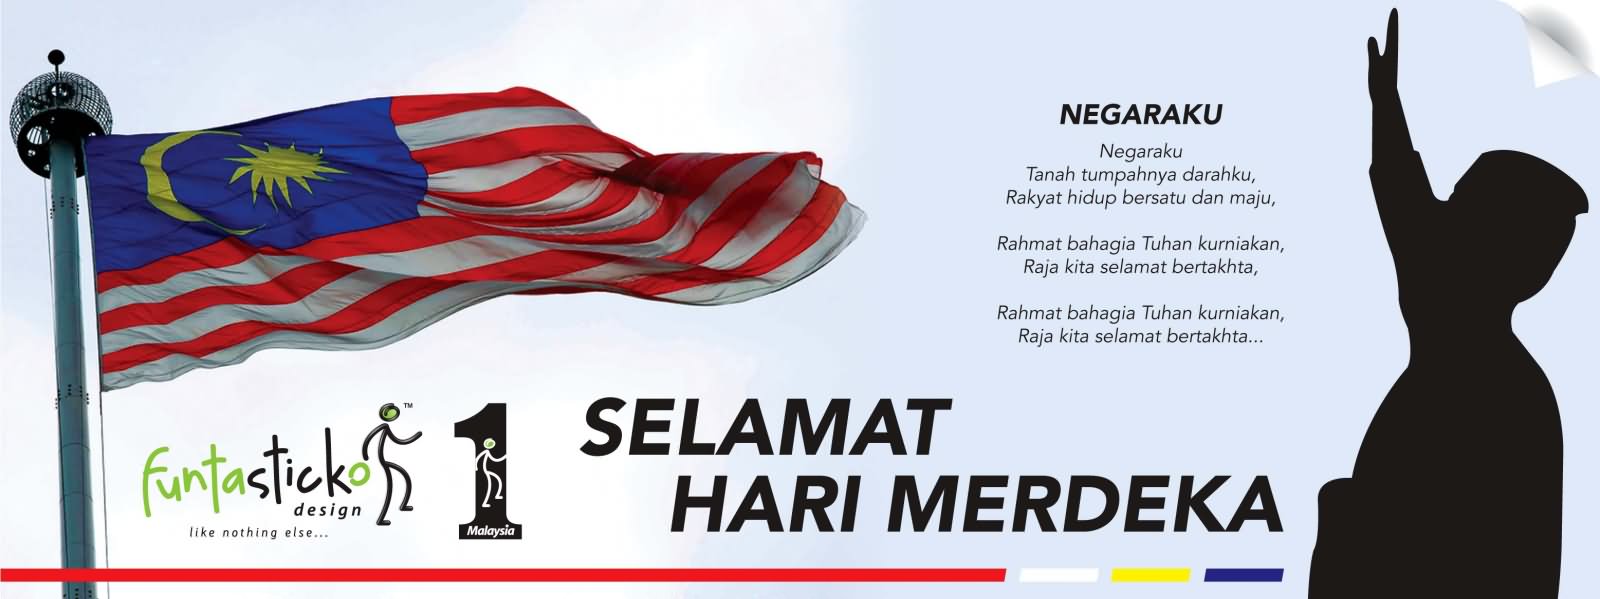 Selamat Hari Kemerdekaan Happy Independence Day Malaysia